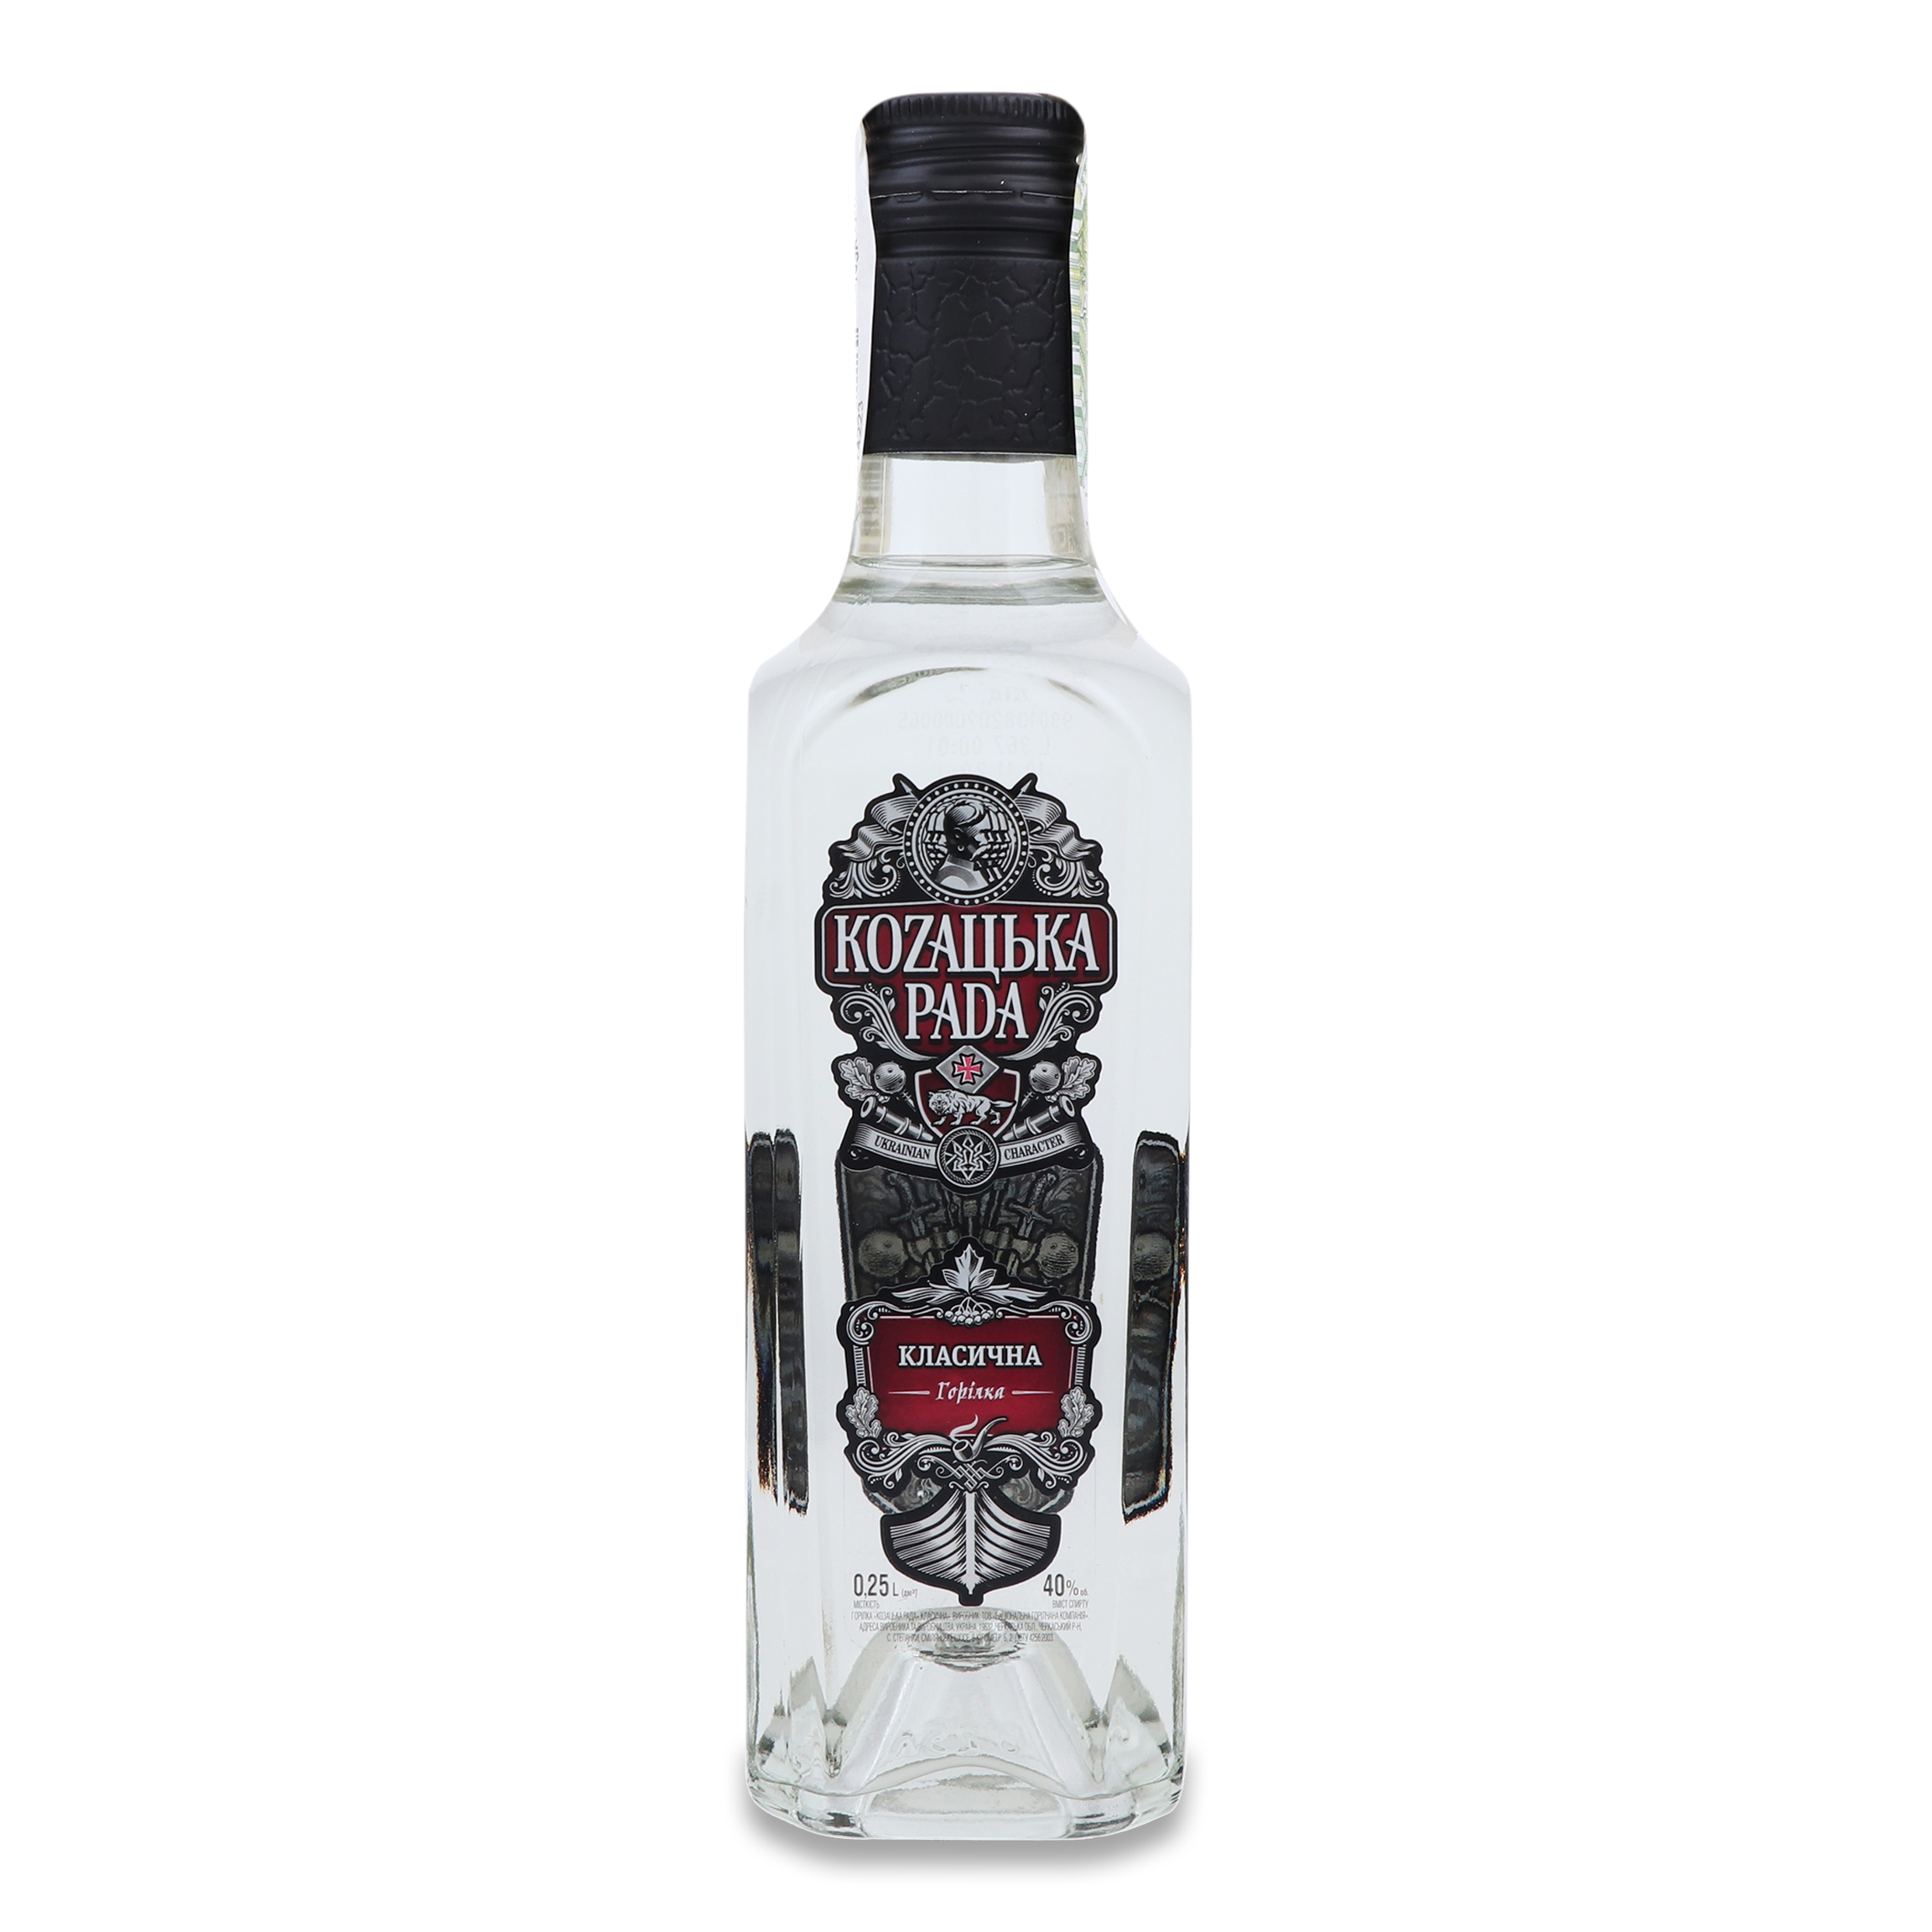 Kozaцьka Rada Classic vodka 40% 0,25l